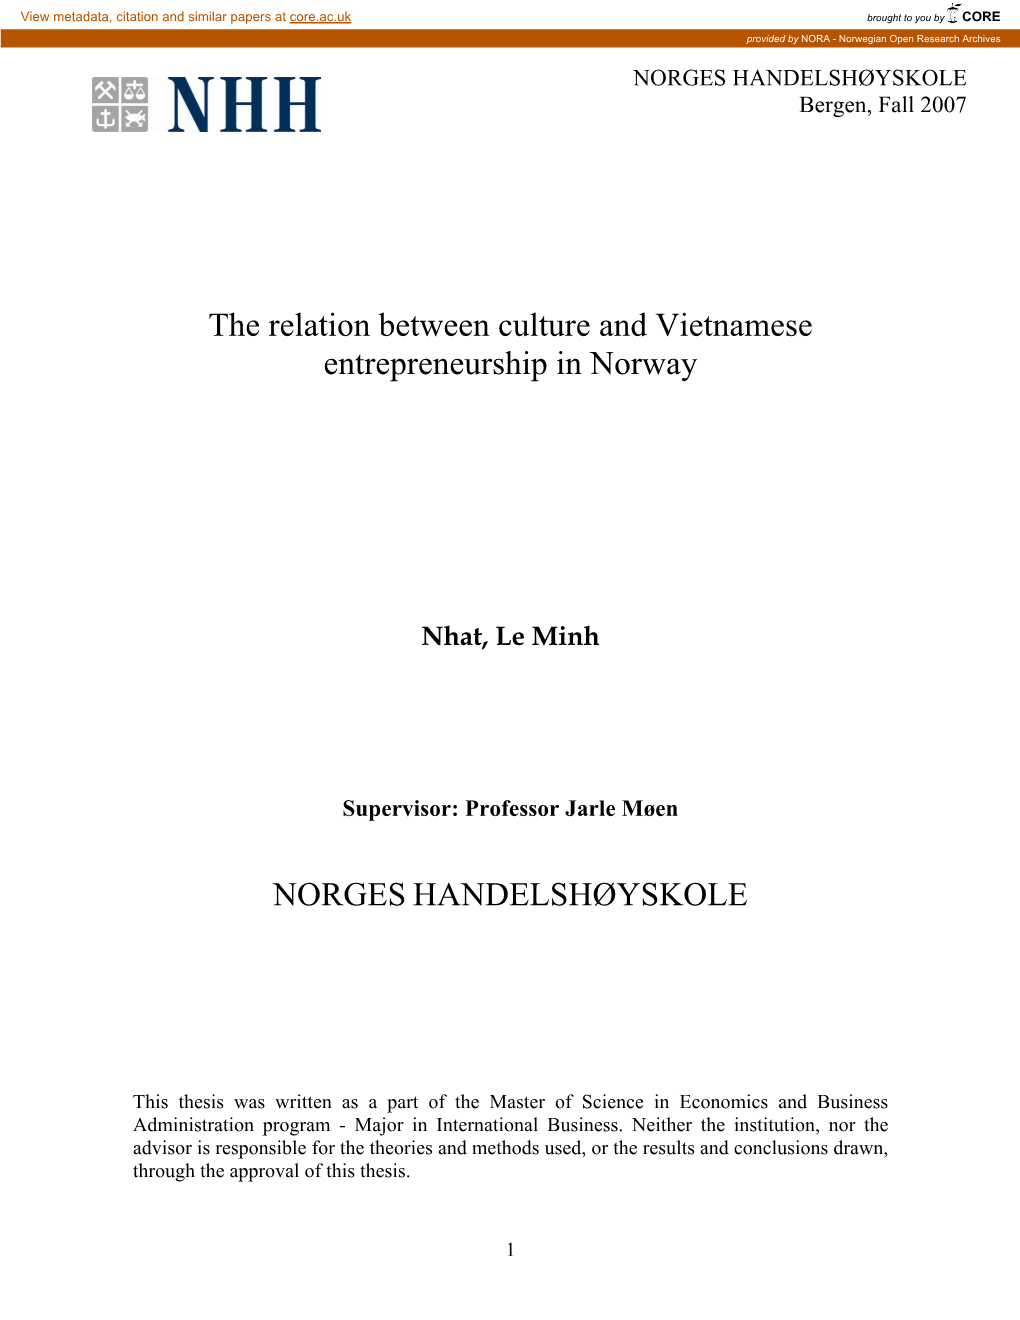 The Relation Between Culture and Vietnamese Entrepreneurship in Norway NORGES HANDELSHØYSKOLE